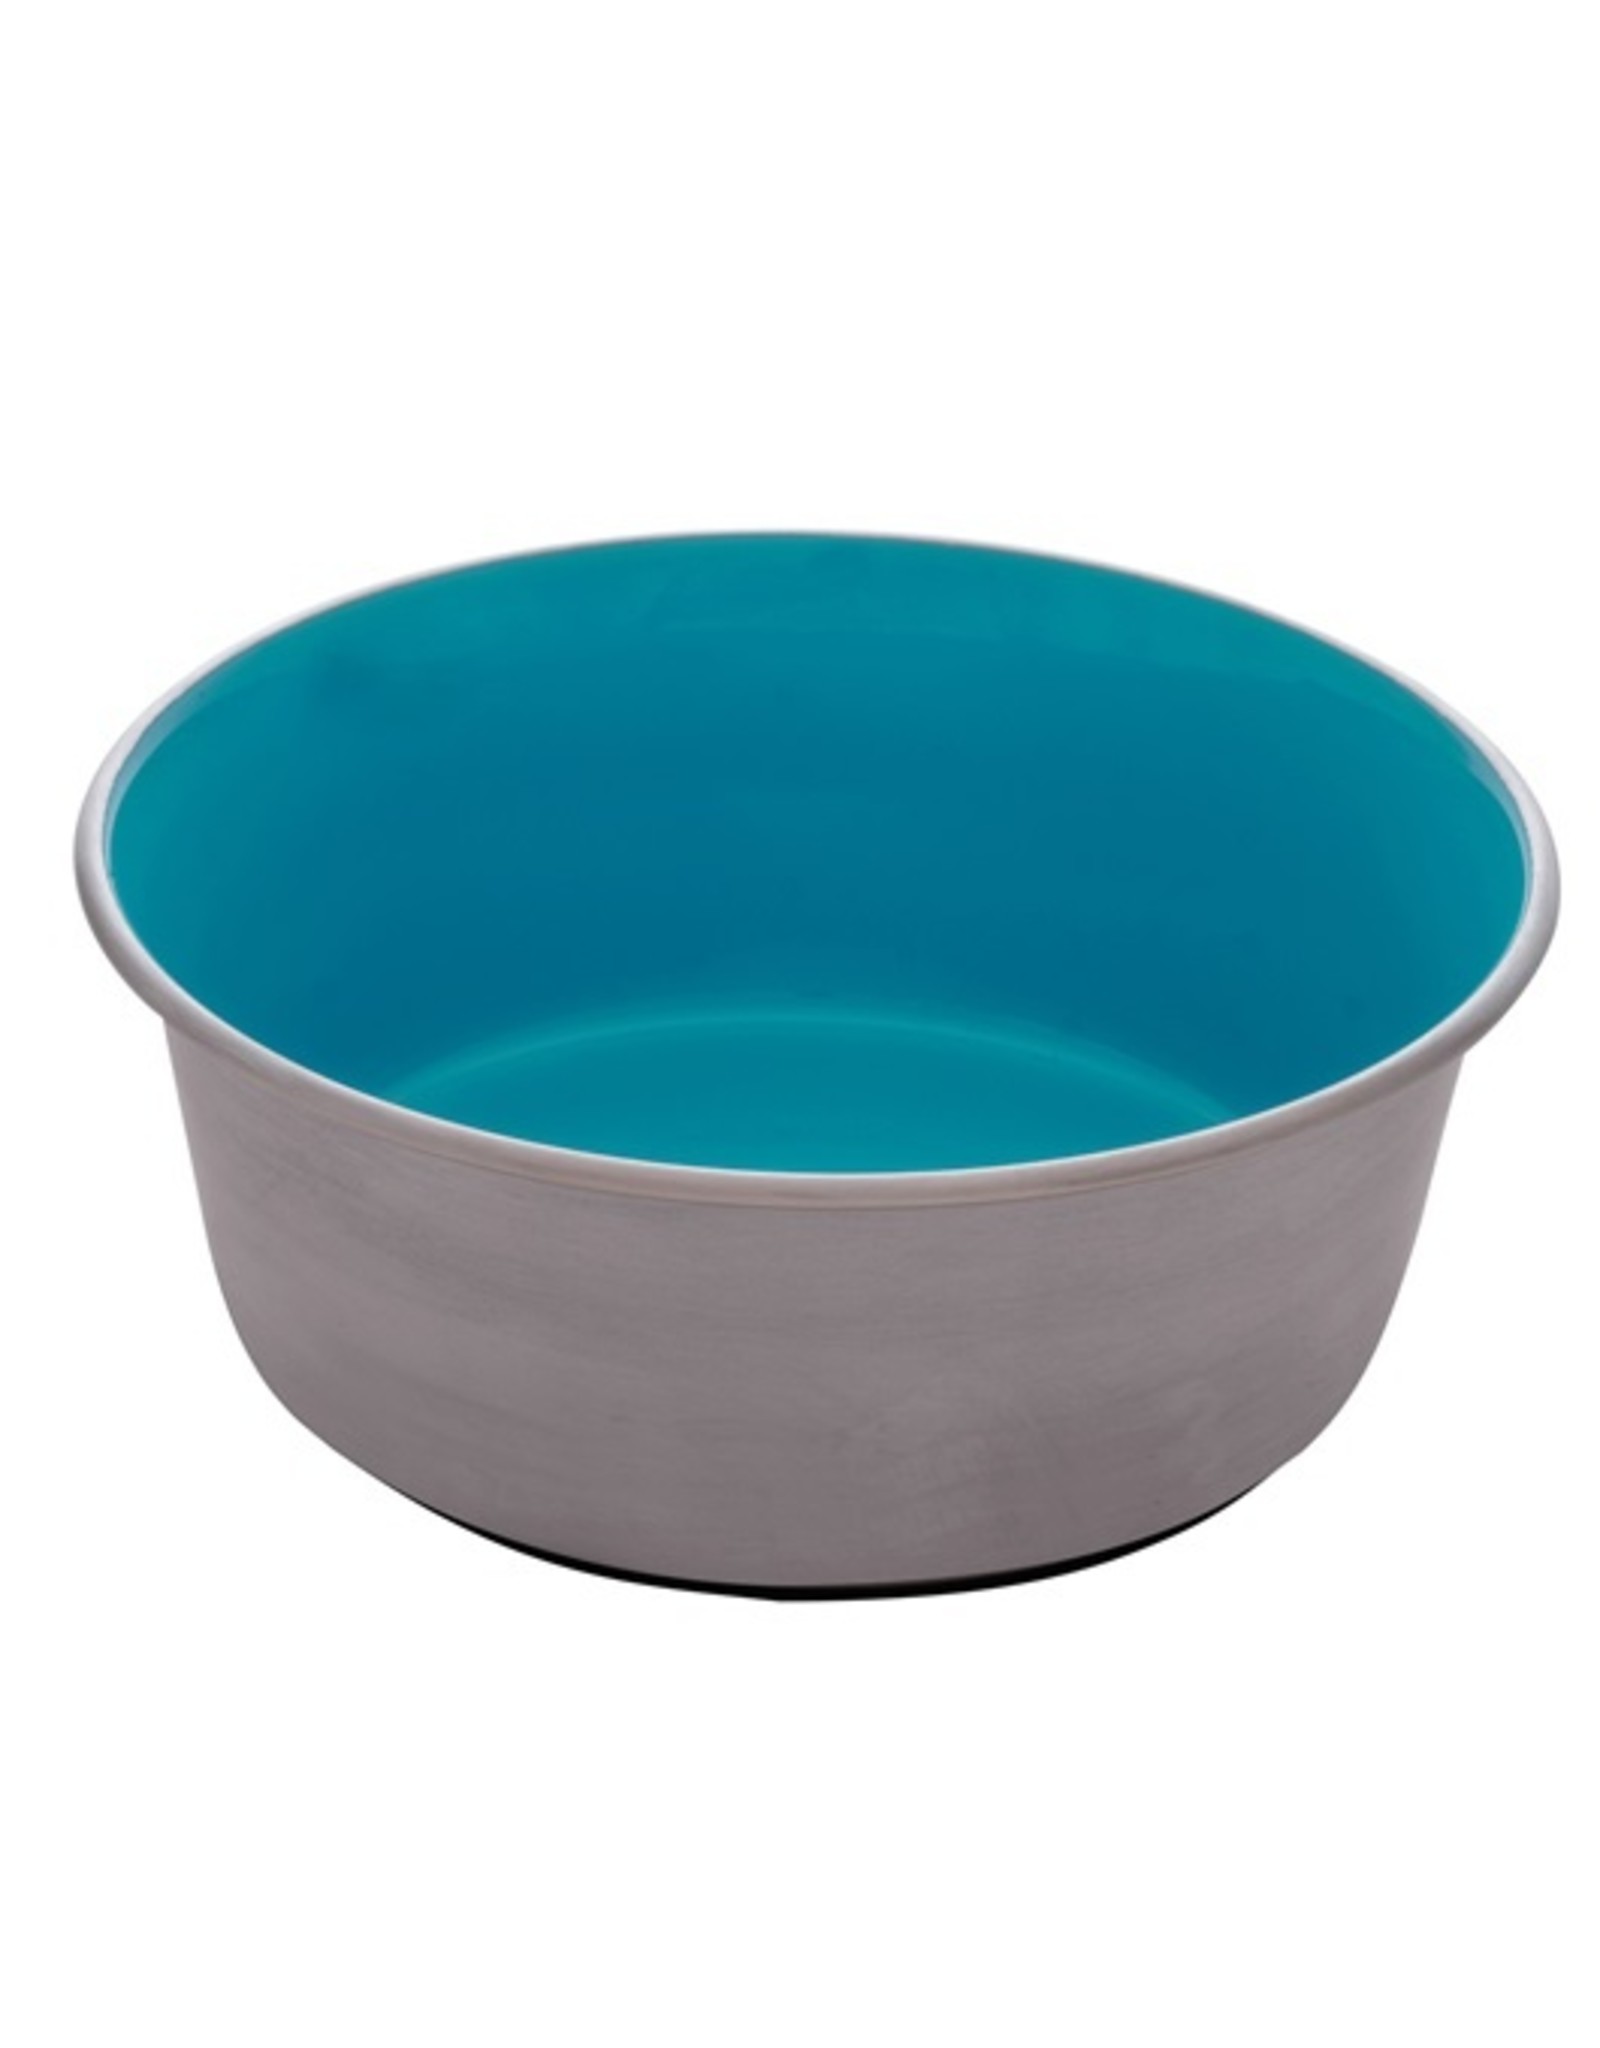 DogIt Stainless Steel Non-Skid Bowl Blue 560ml